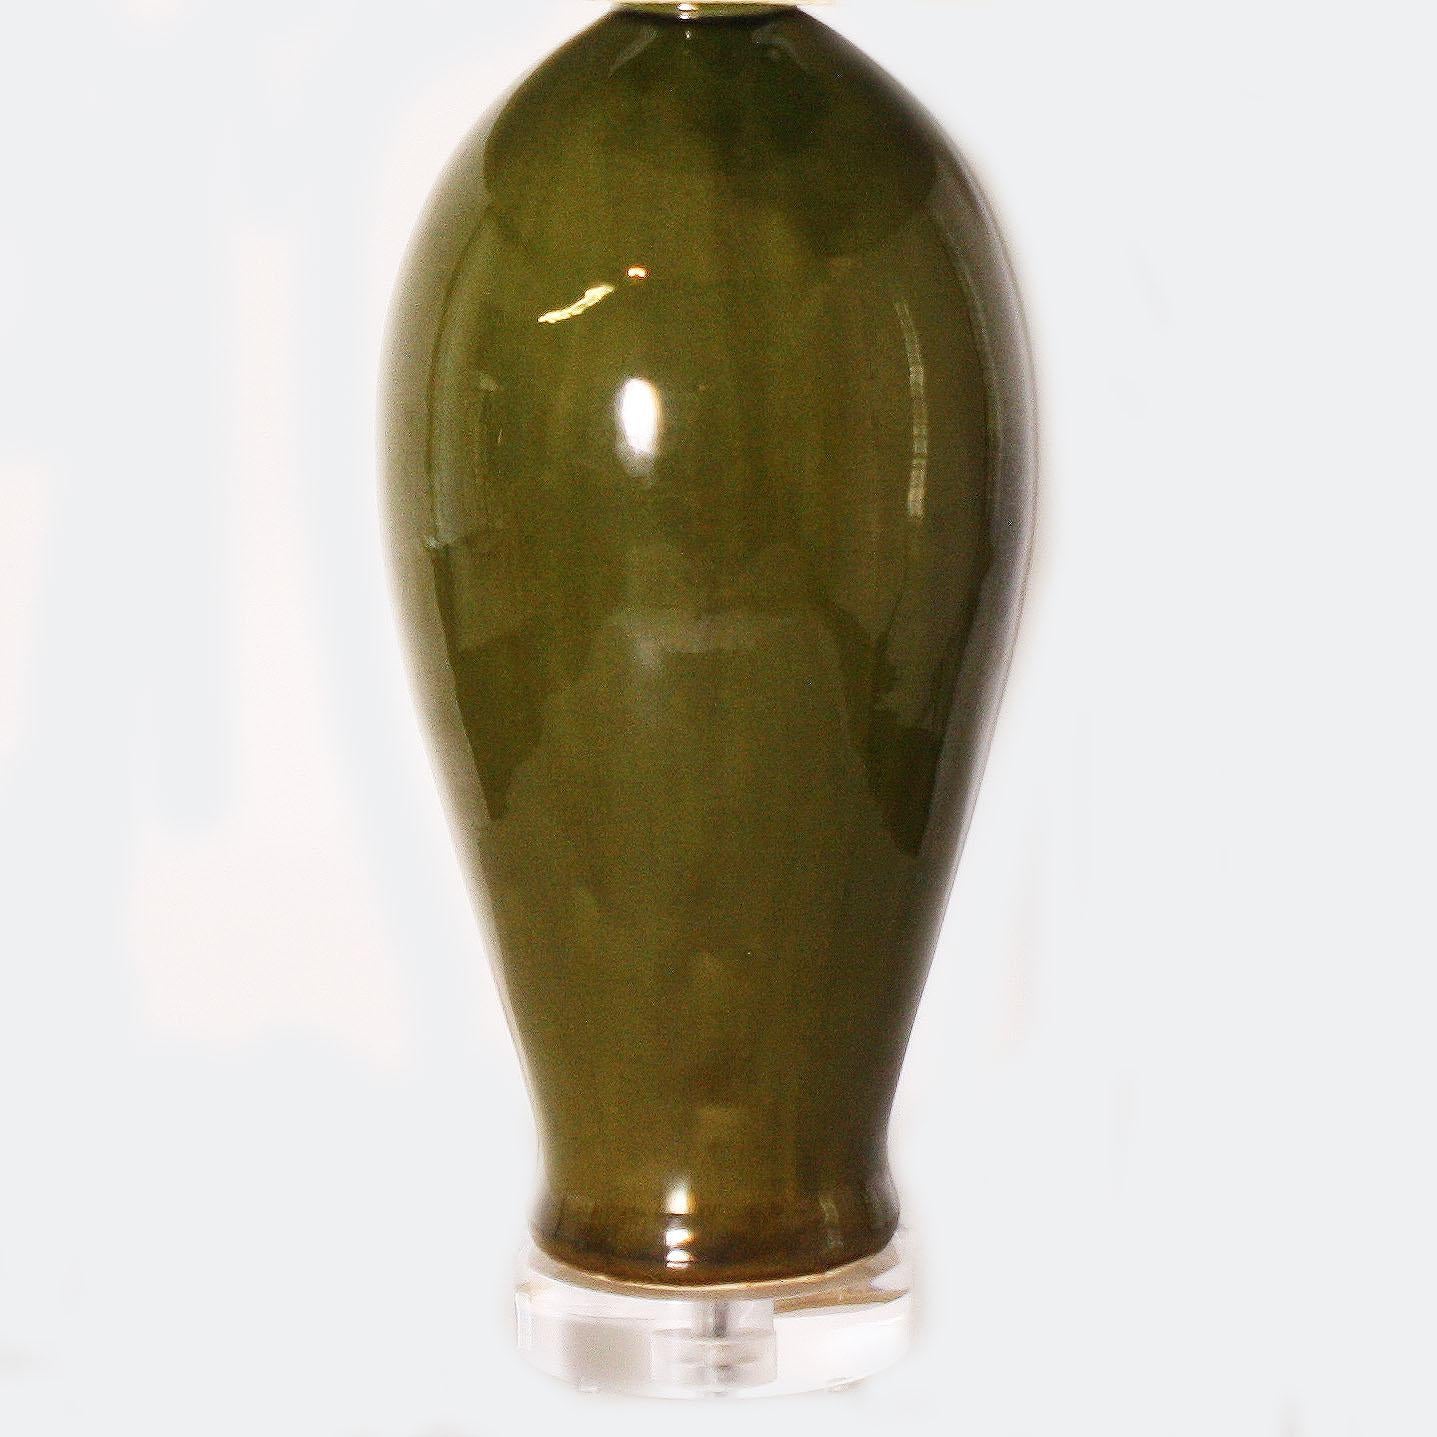 Pair of glazed olive green ceramic lamps, circa 1960
$2900